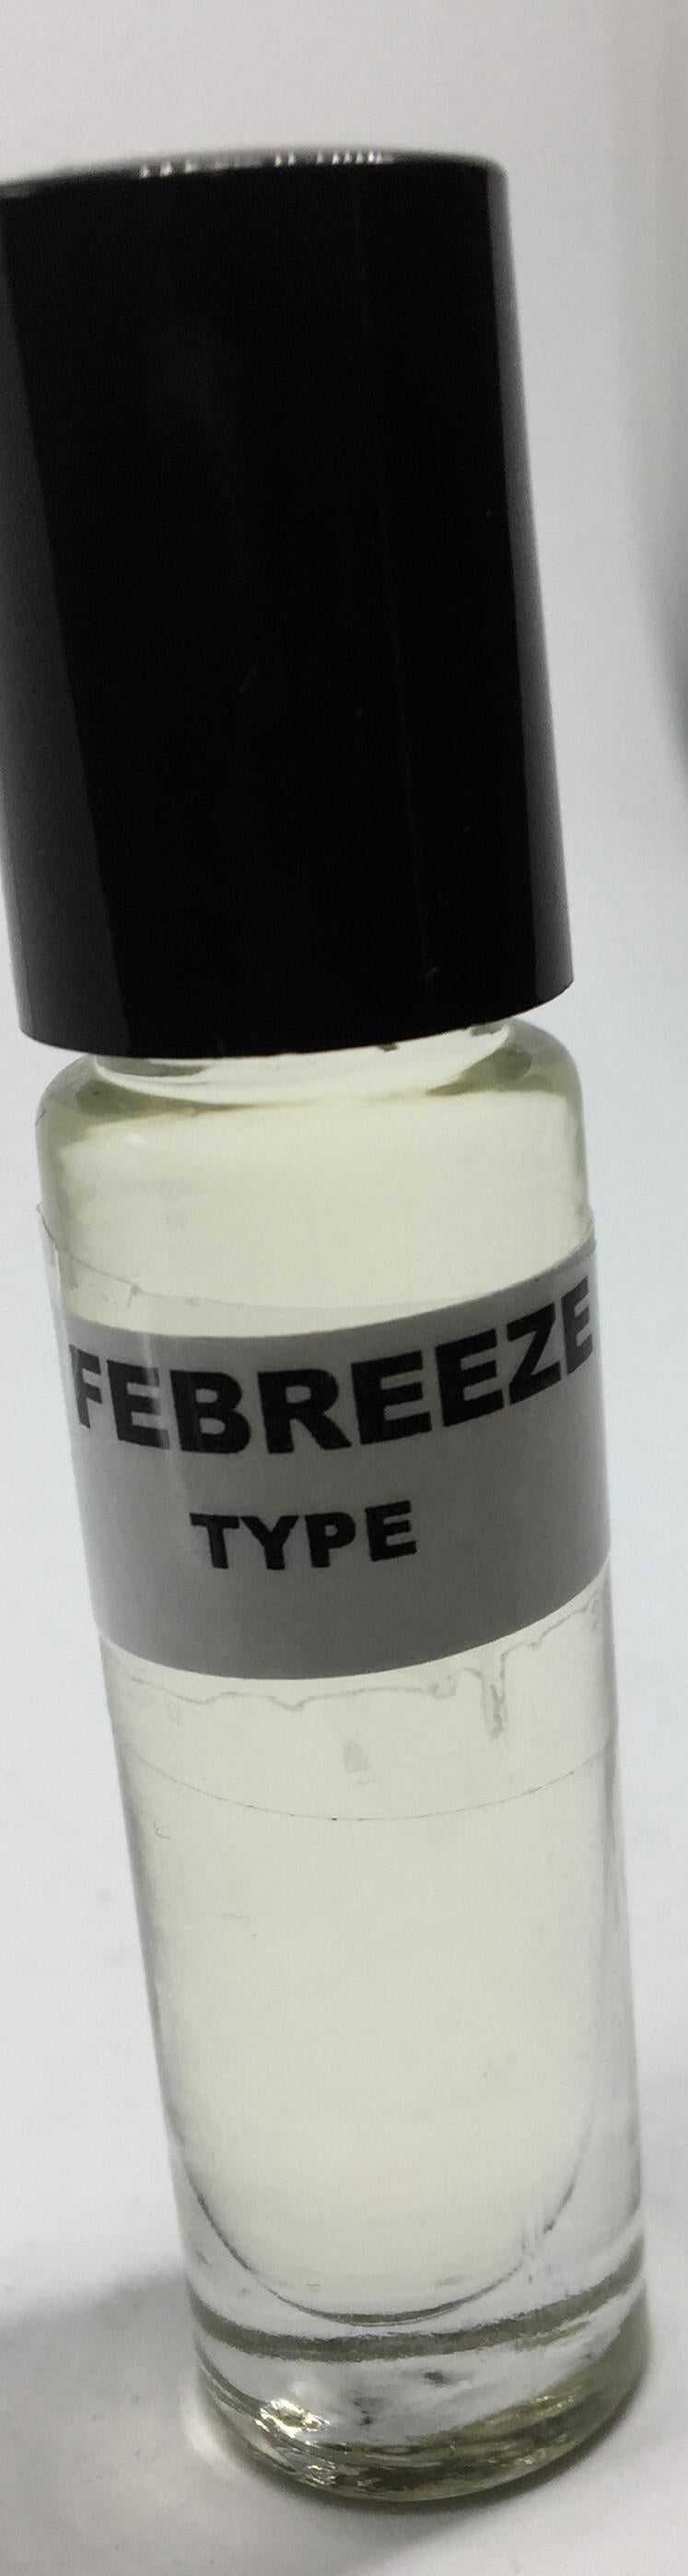 Febreeze Type: Fragrance(Perfume)Body Oil Unisex